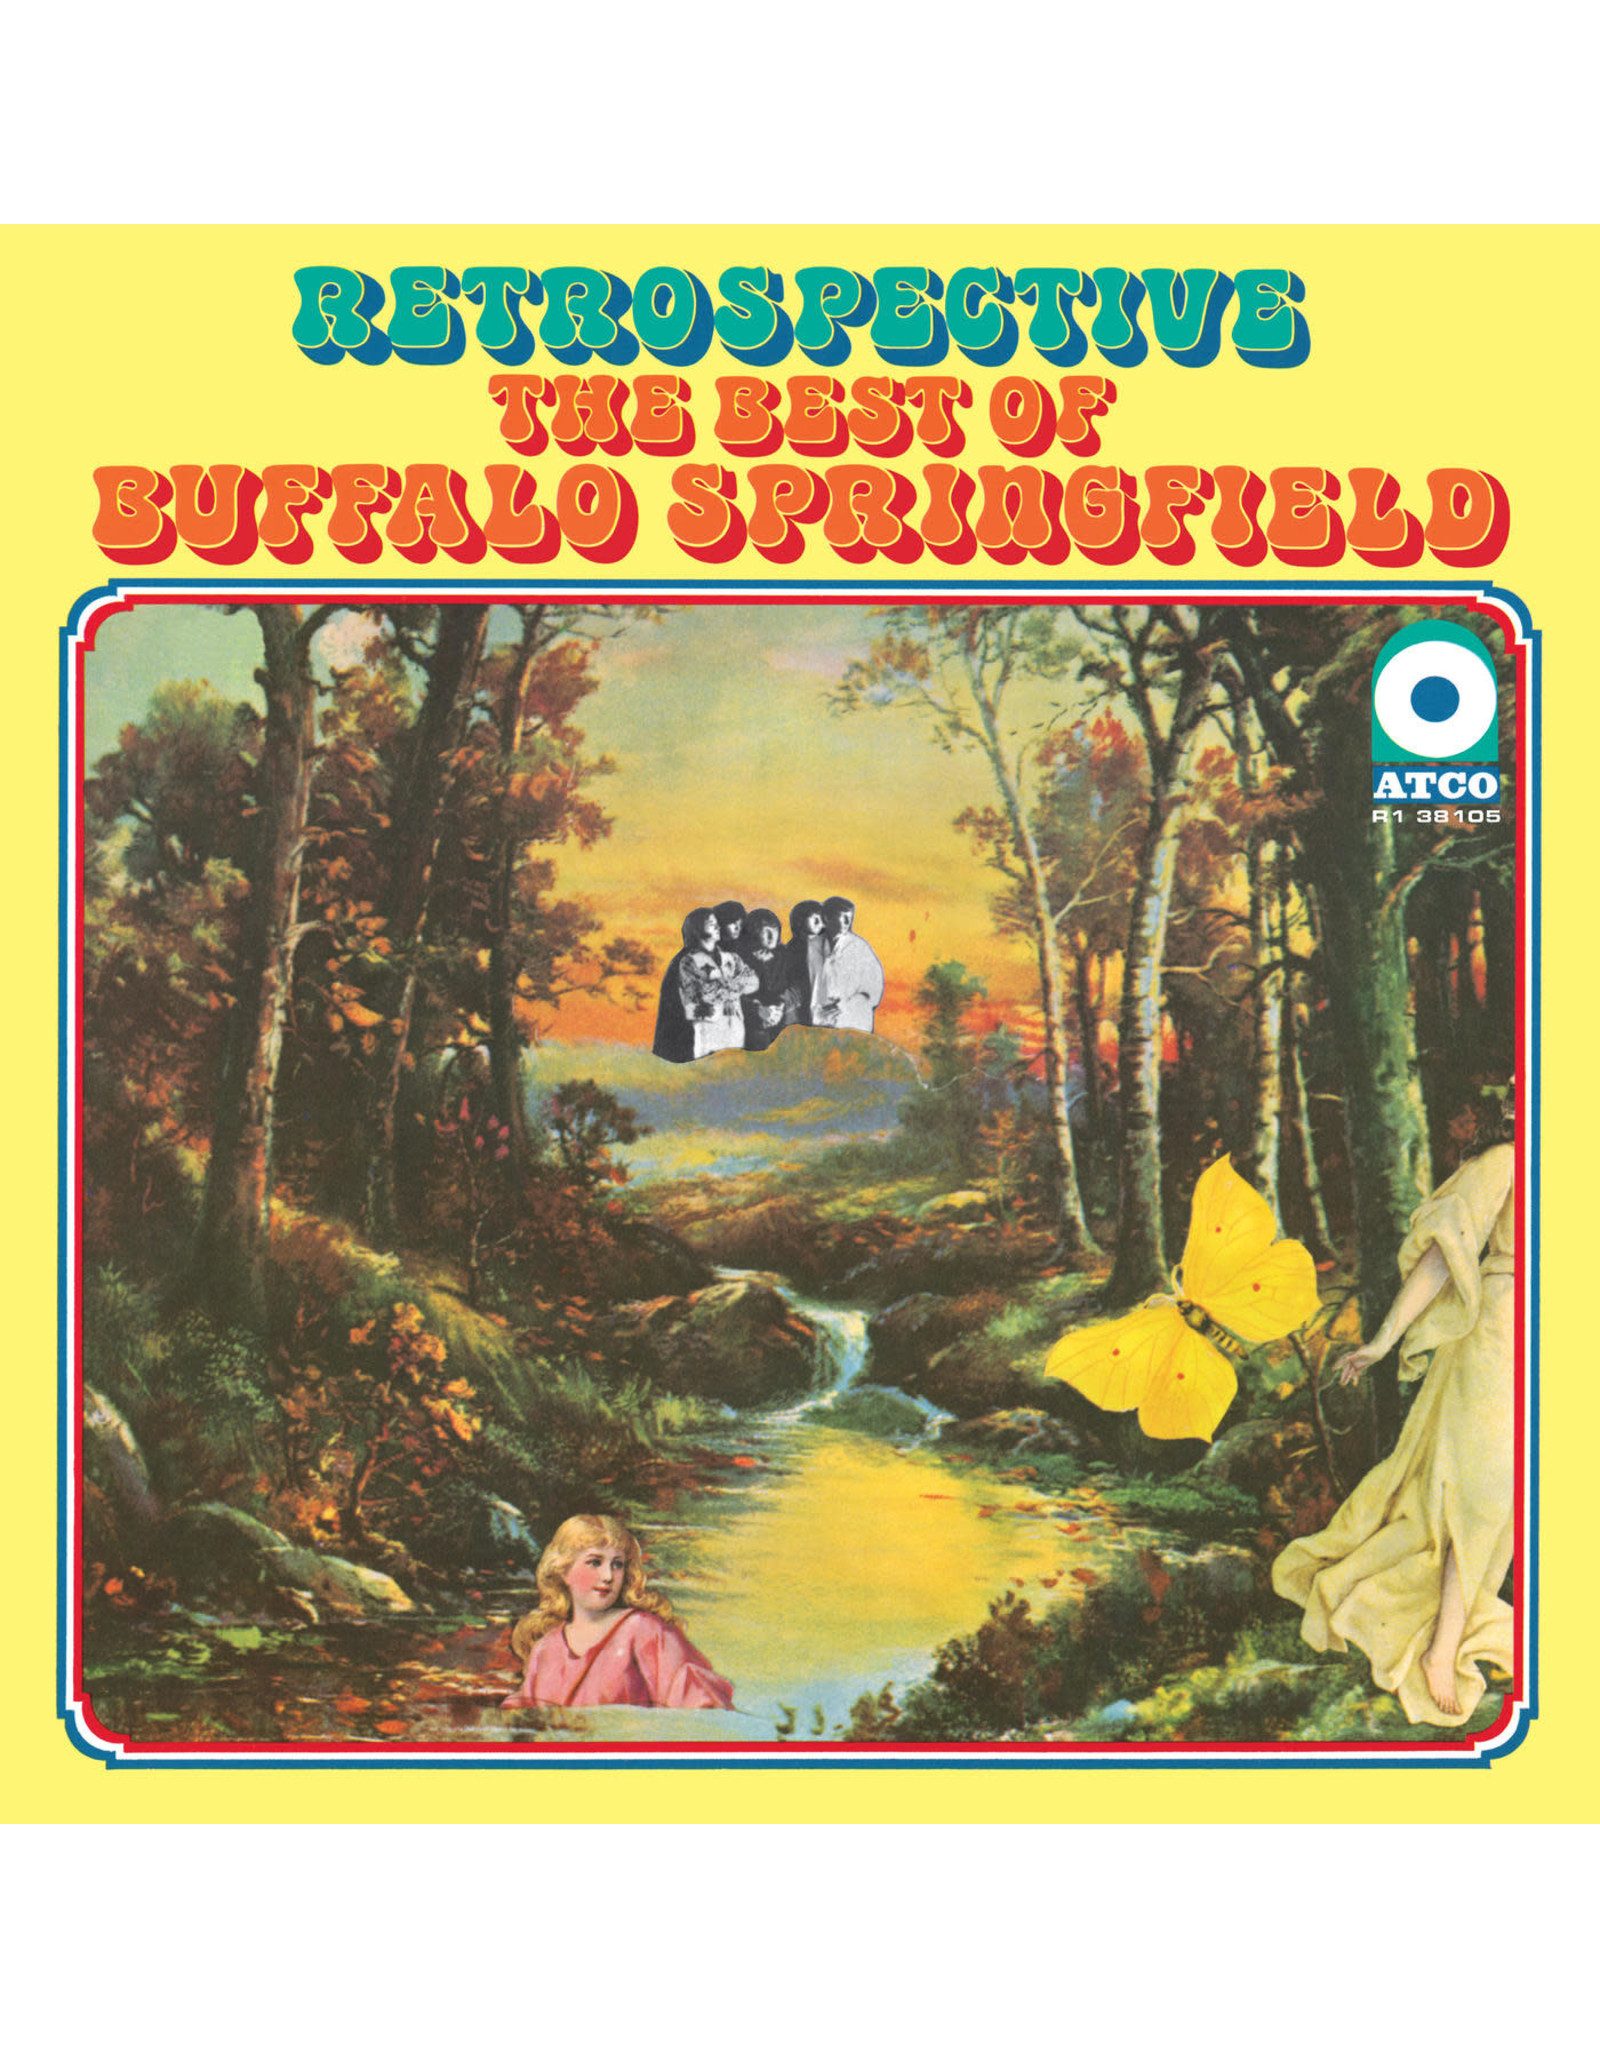 Rhino Buffalo Springfield: Retrospective LP